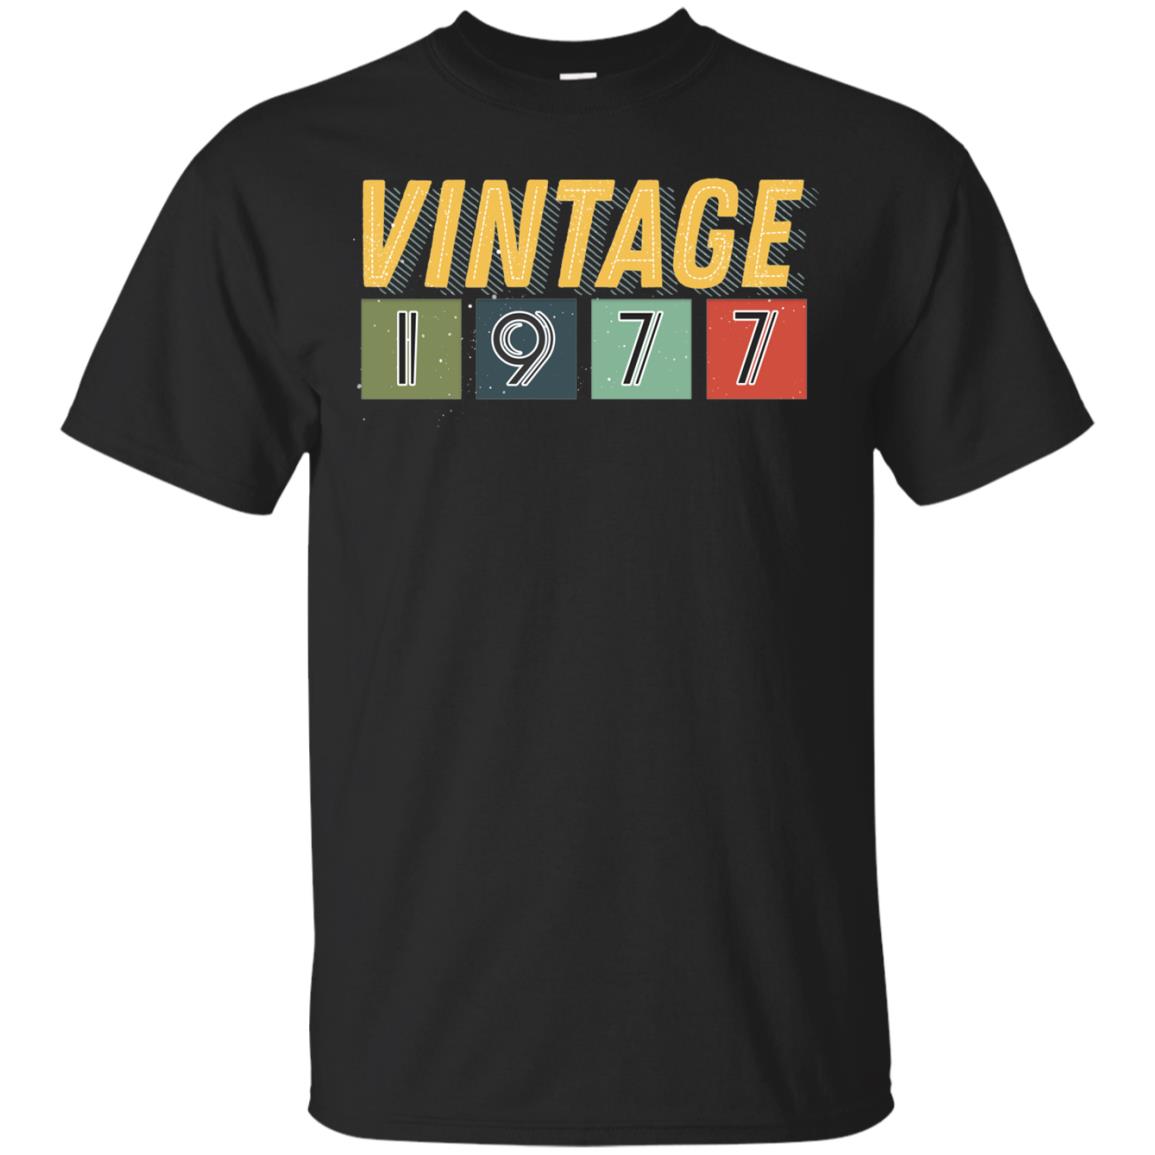 Vintage 1977 41th Birthday Gift Shirt For Mens Or WomensG200 Gildan Ultra Cotton T-Shirt